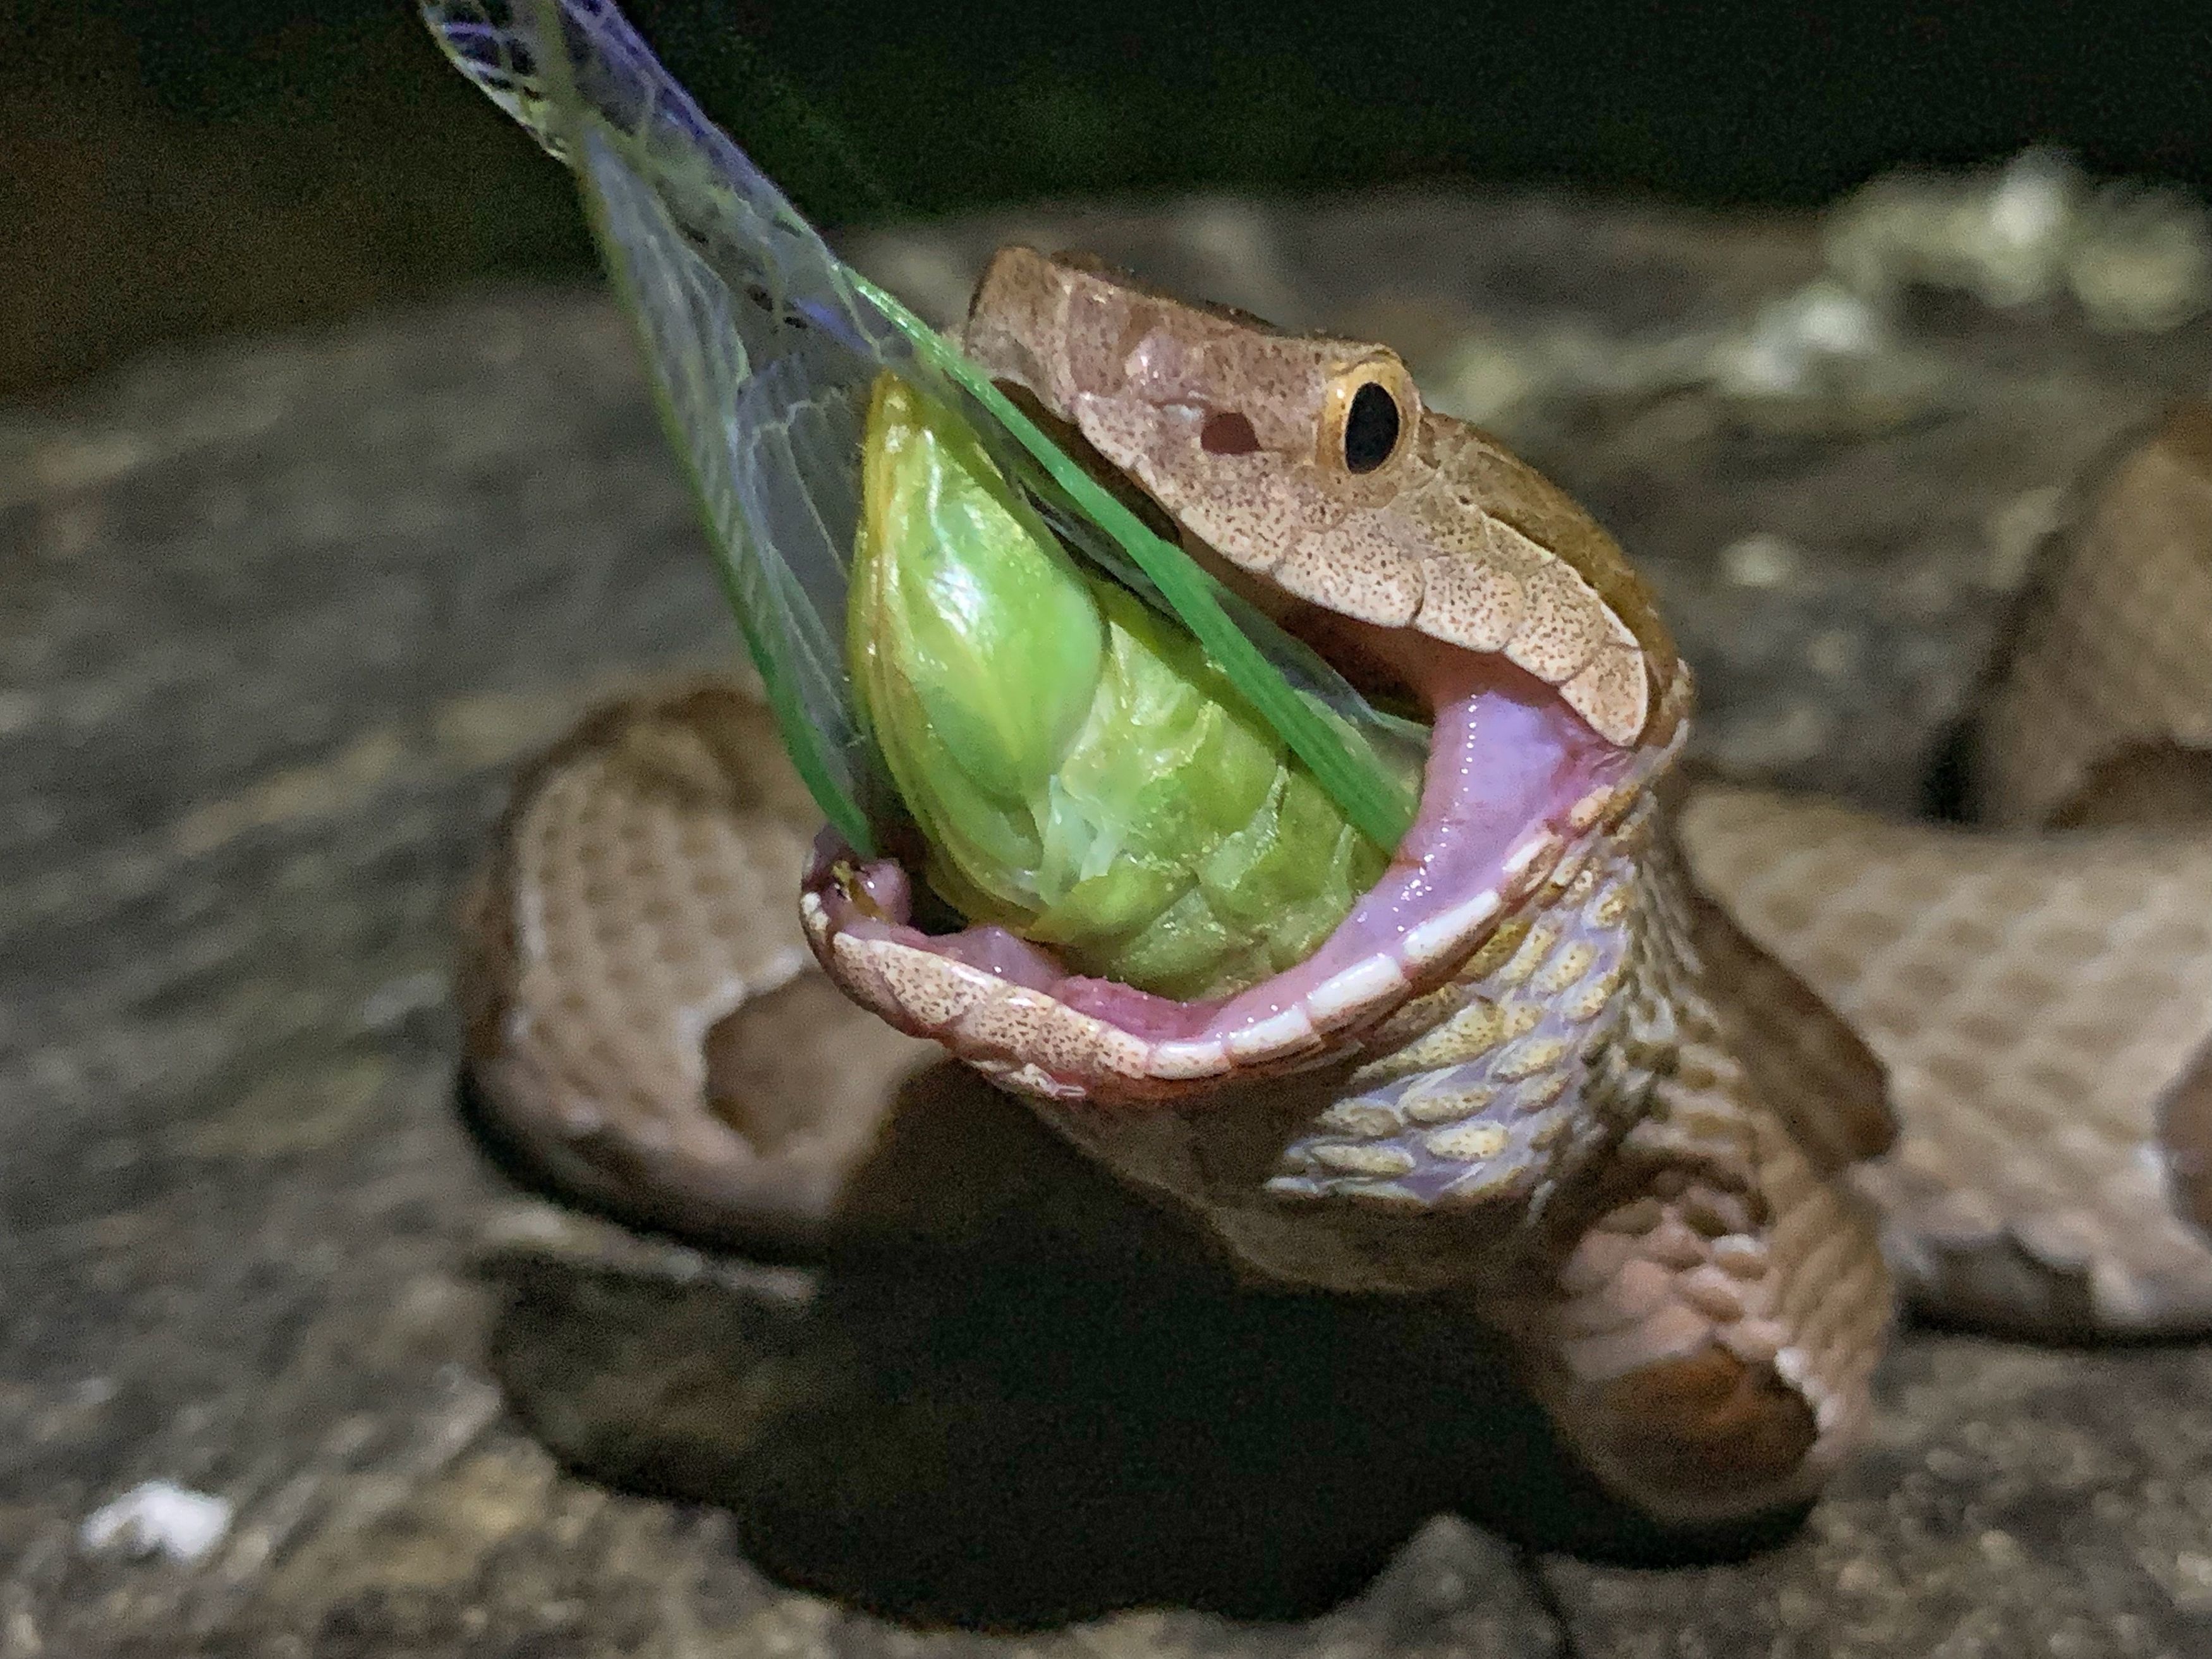 A copperhead snake eating a cicada 